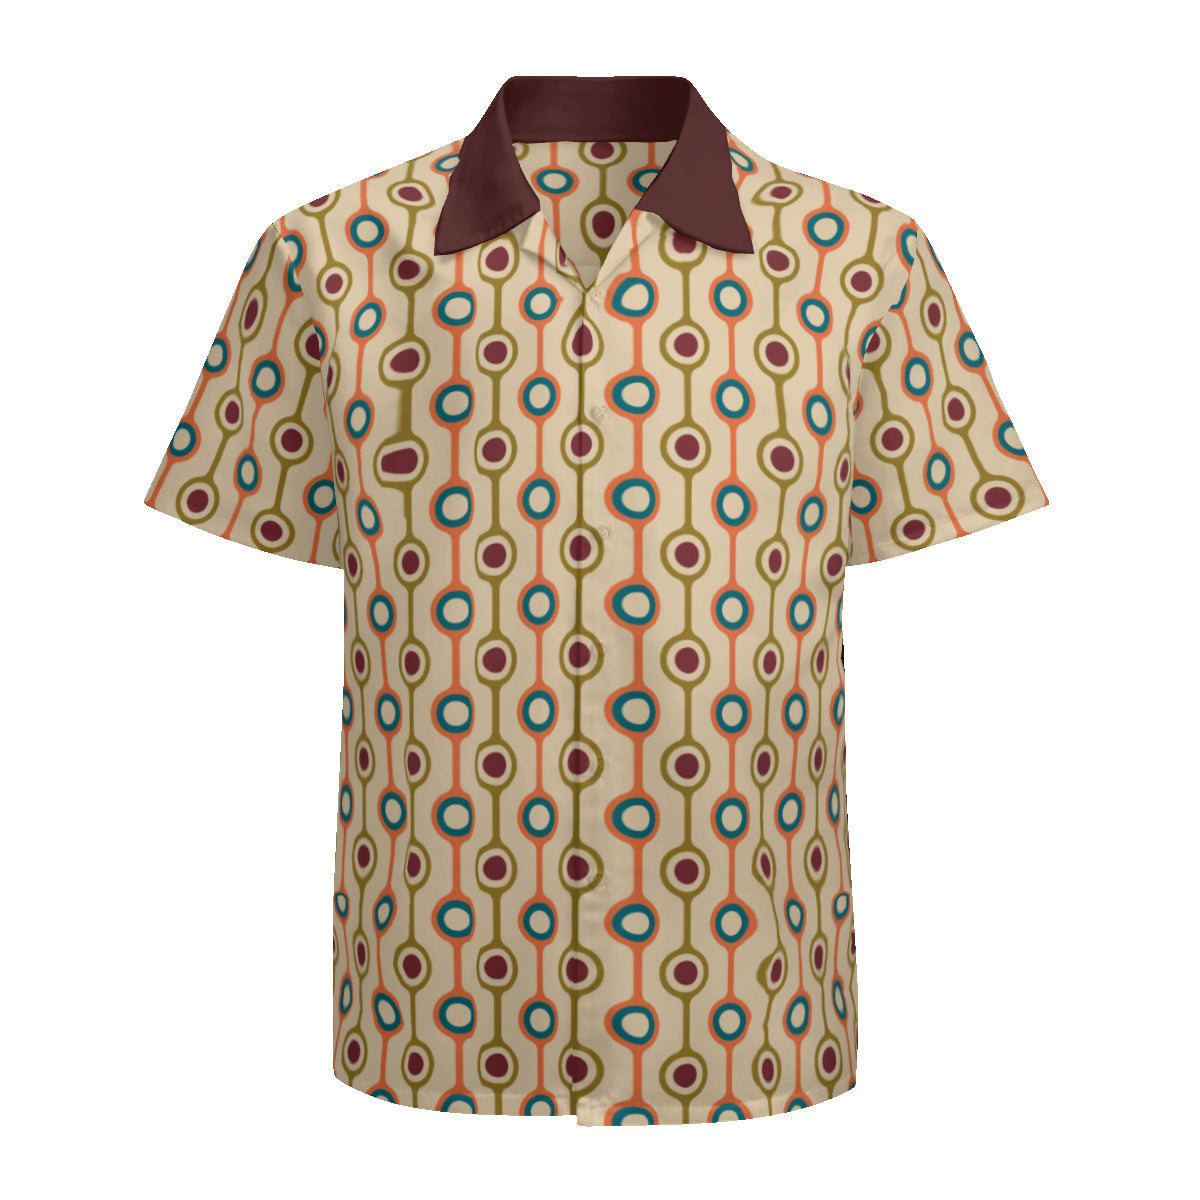 Mod Shirt Men, 60s Shirt style men, Retro Shirt Men, 60s style shirt, Vintage top Men, Vintage Style Top, Brown Geometric Shirt Men